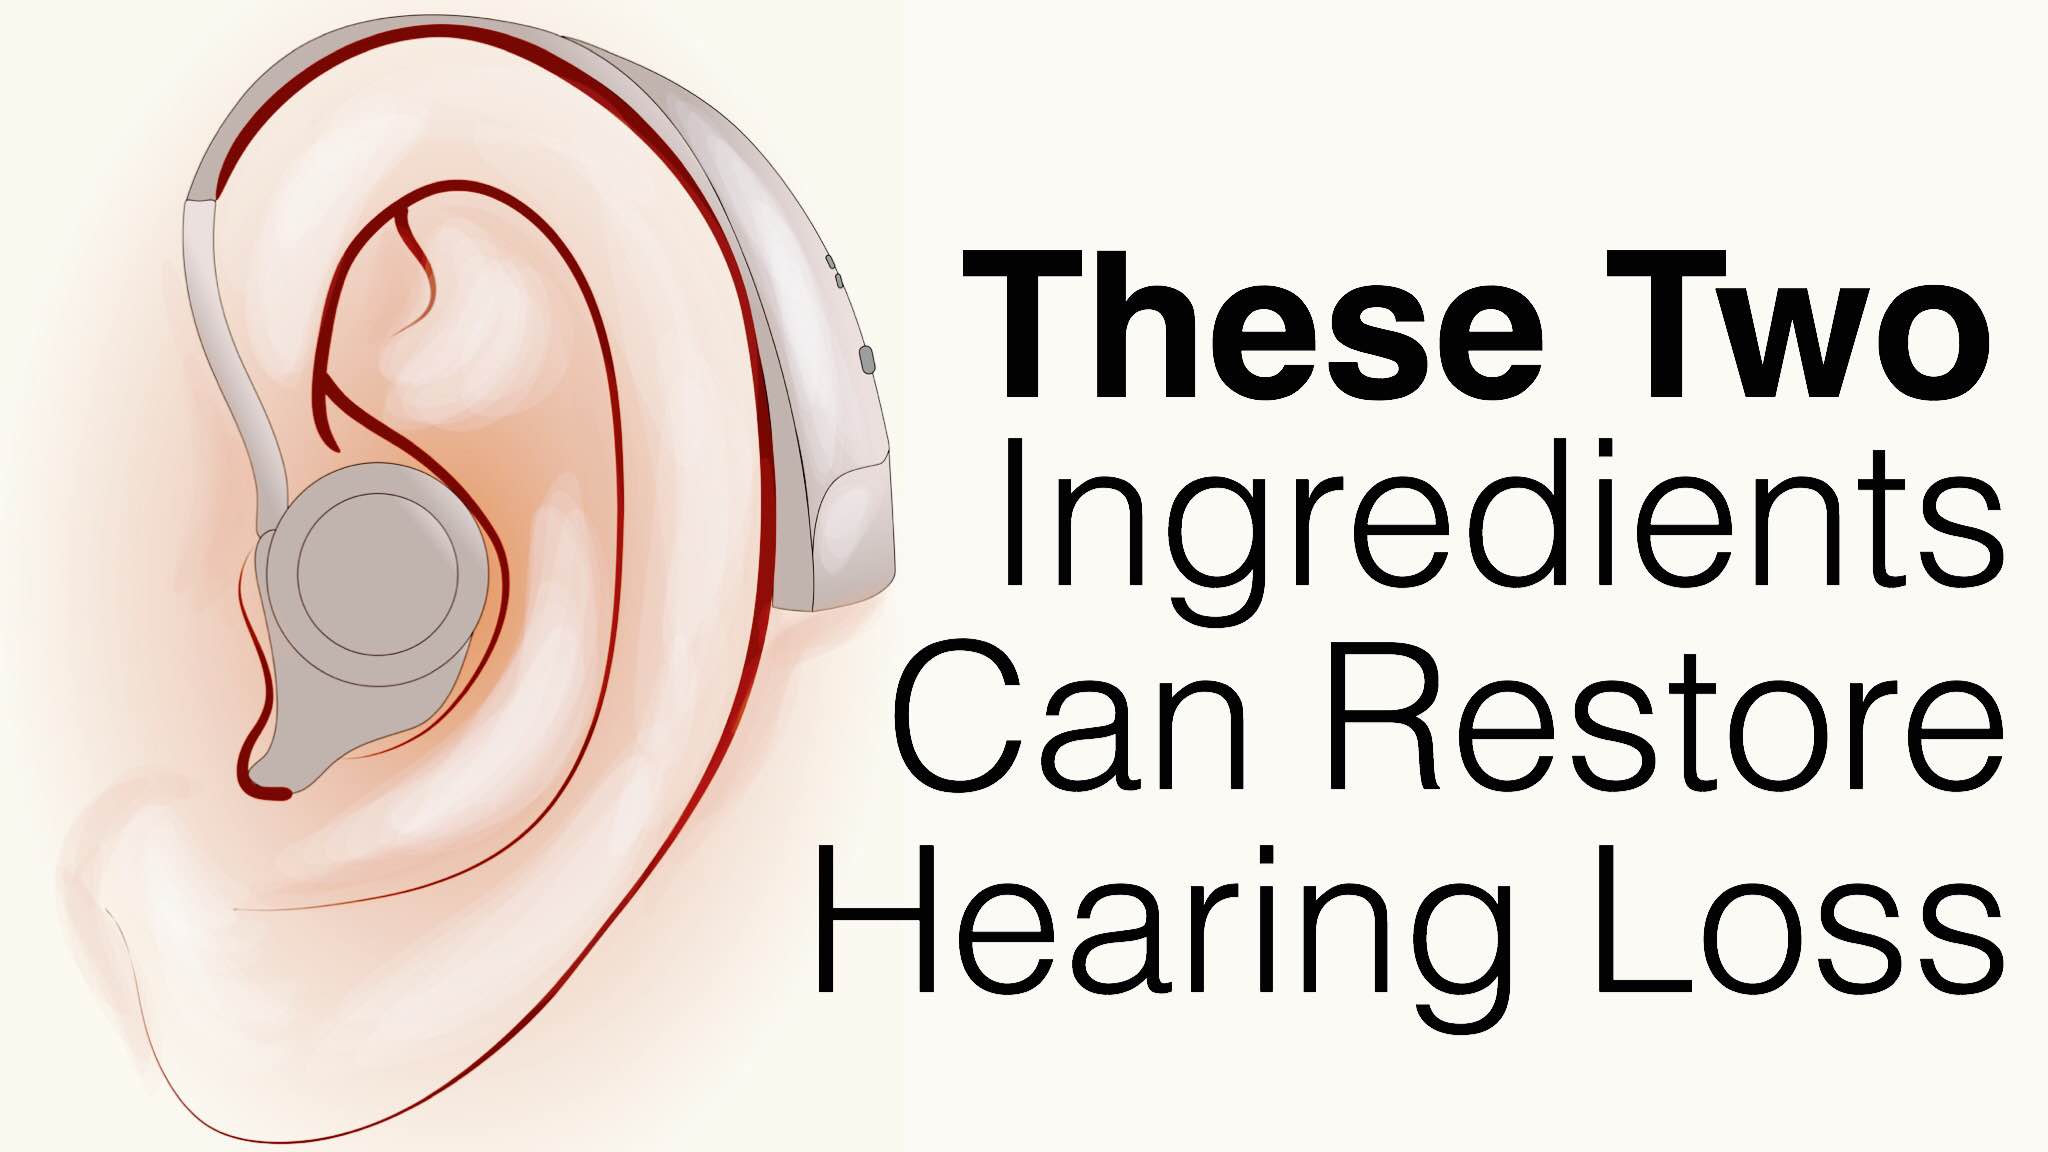 Best Ingredients To Restore Hearing Loss